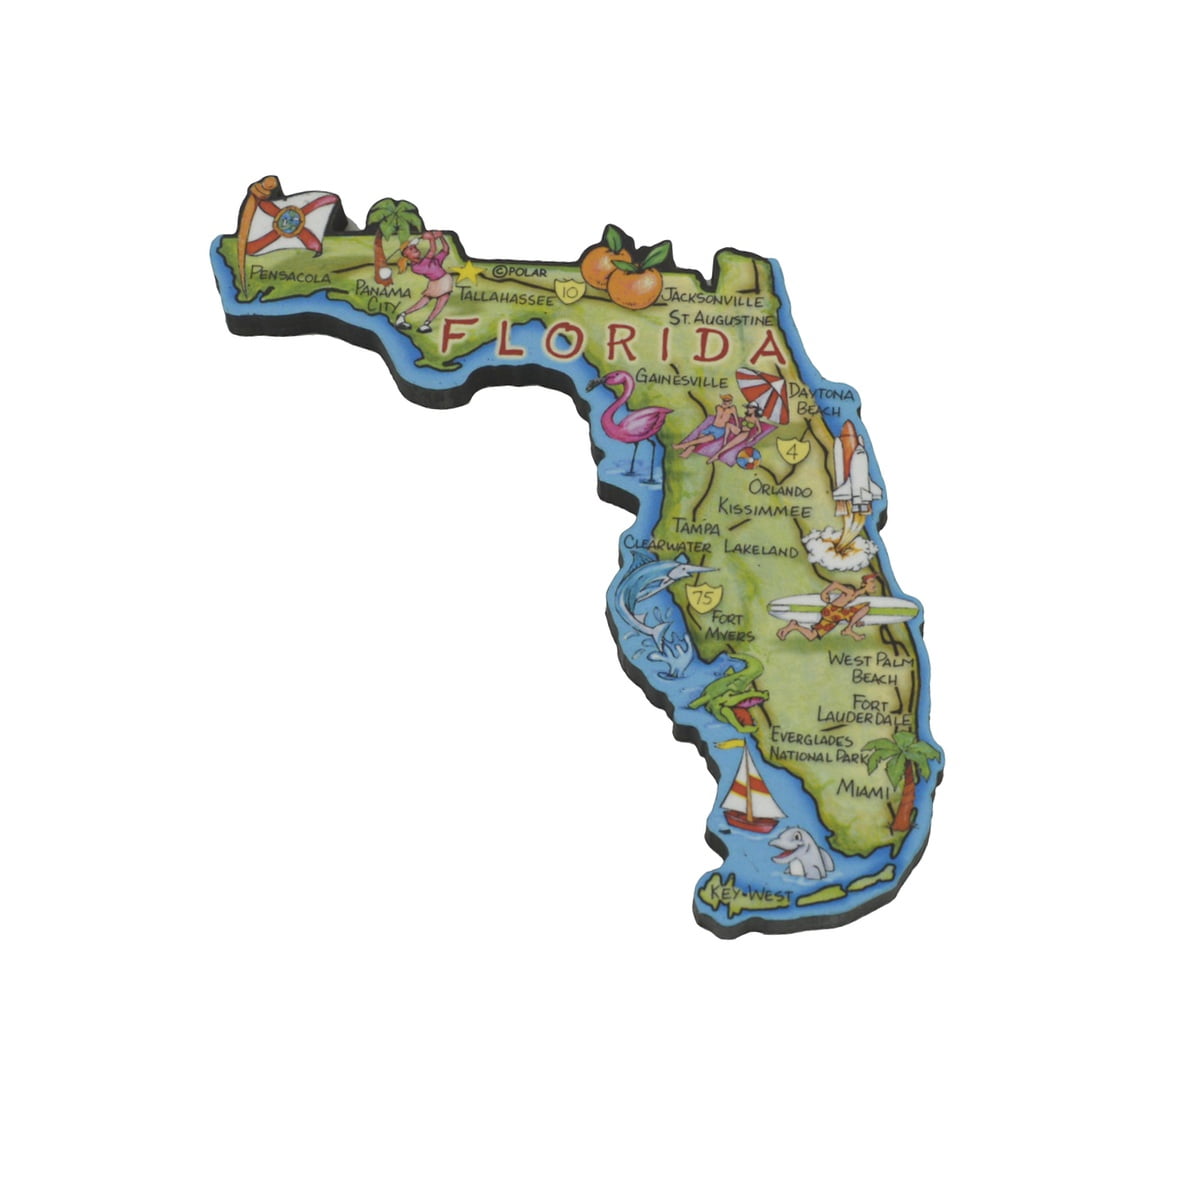 2 x 2 inches each Florida State FRIDGE MAGNET Set alligator flamingo